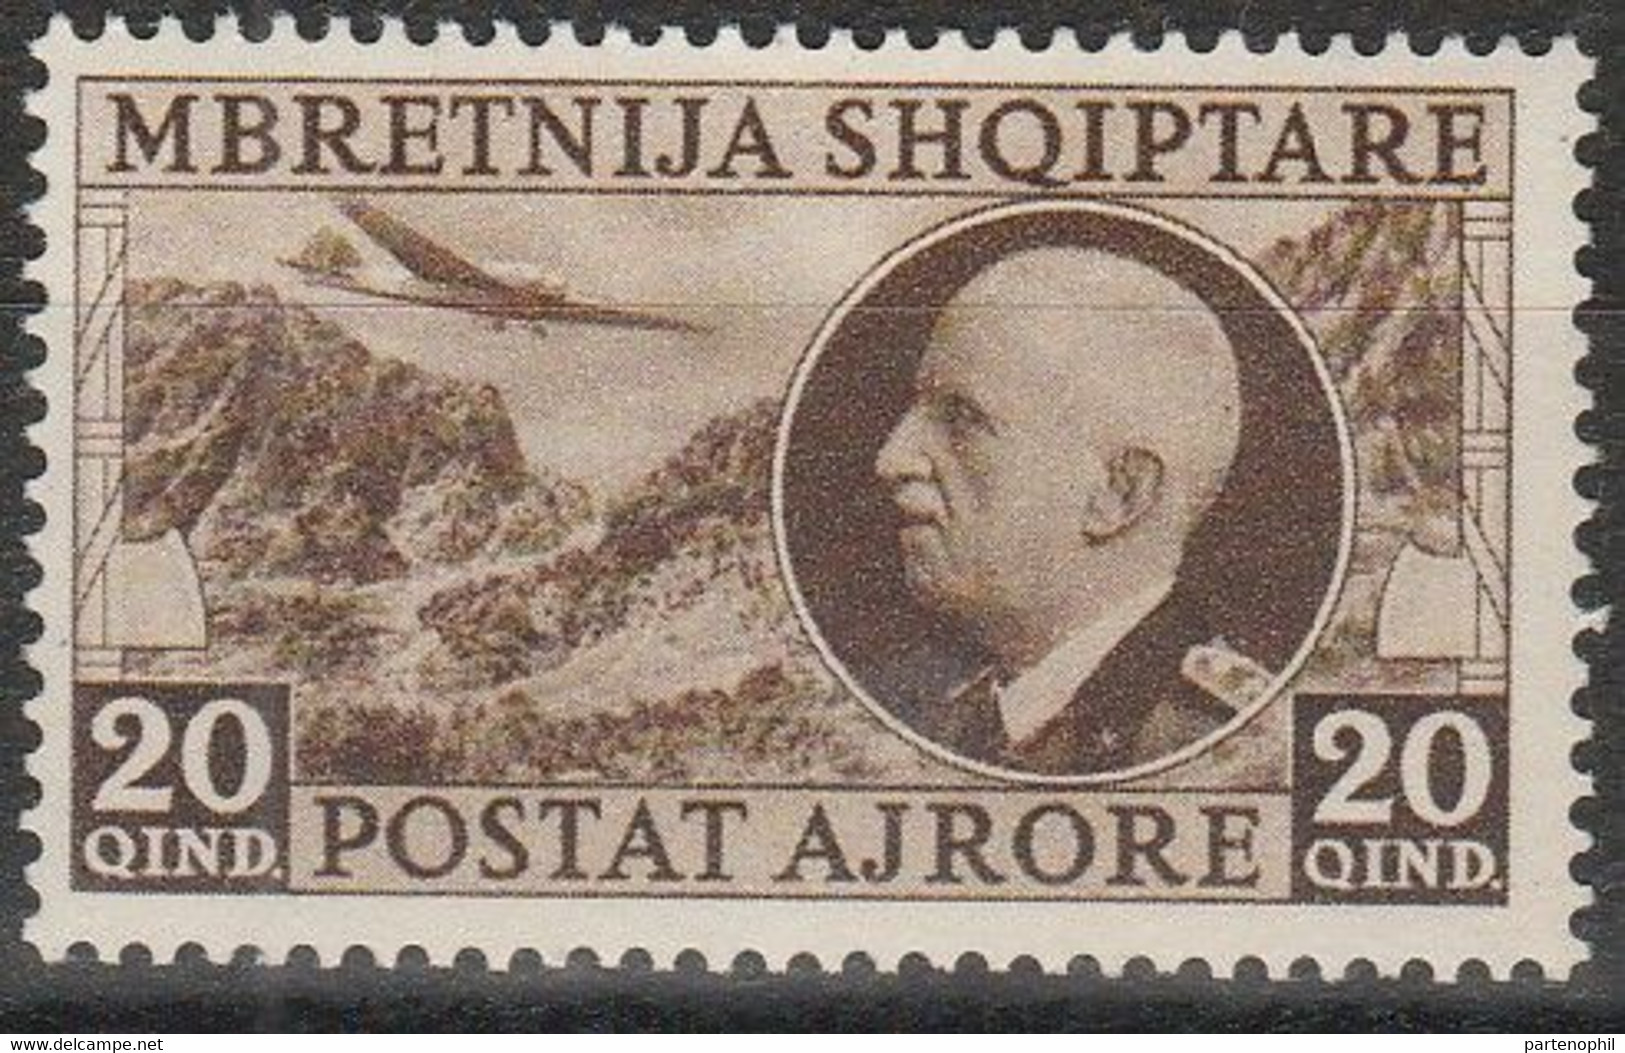 279 Occupazione Italiana Albania  Posta Aerea - 1939 - Vittorio Emanuele II N. 4. Cat. € 325,00. SPL MNH - Albanien